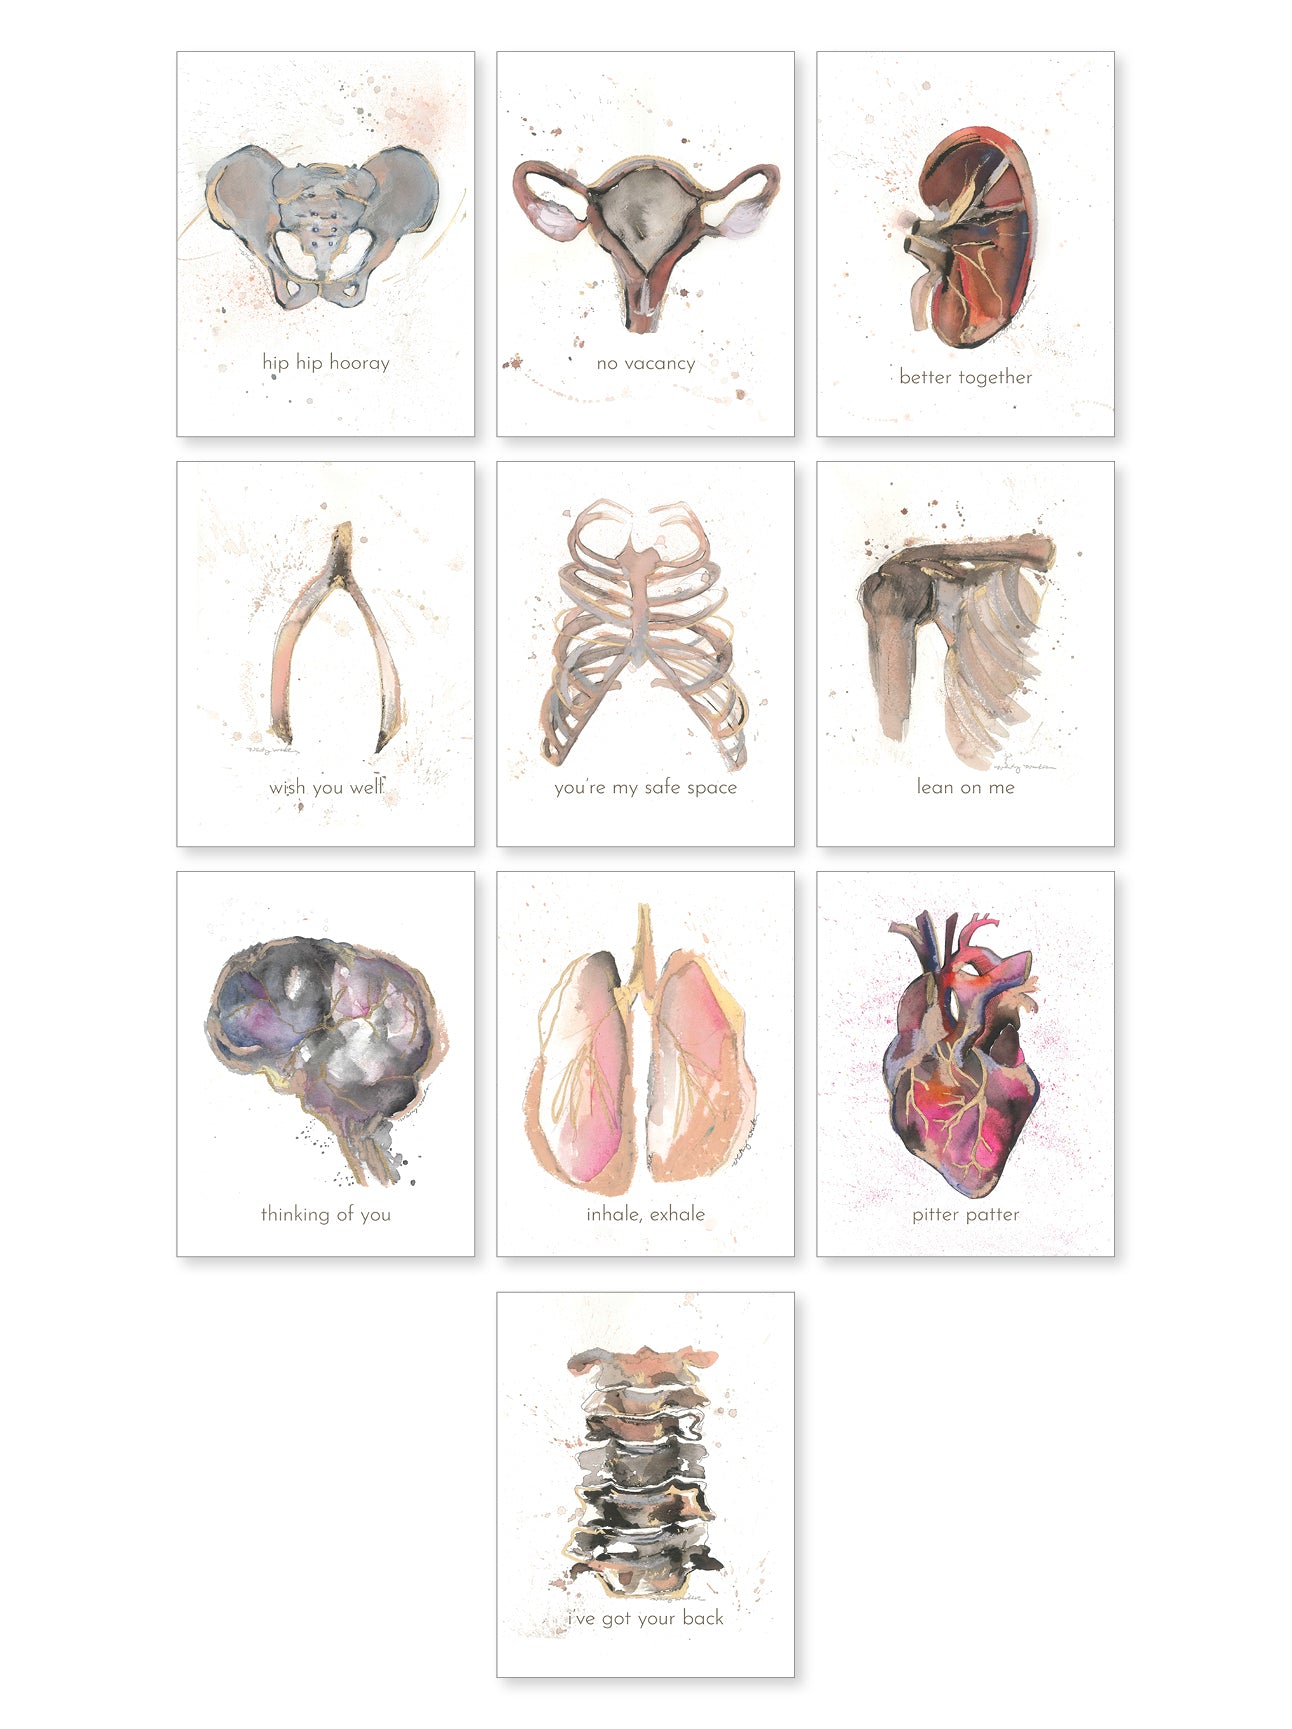 Anatomy Stationery Set (10 notecards)